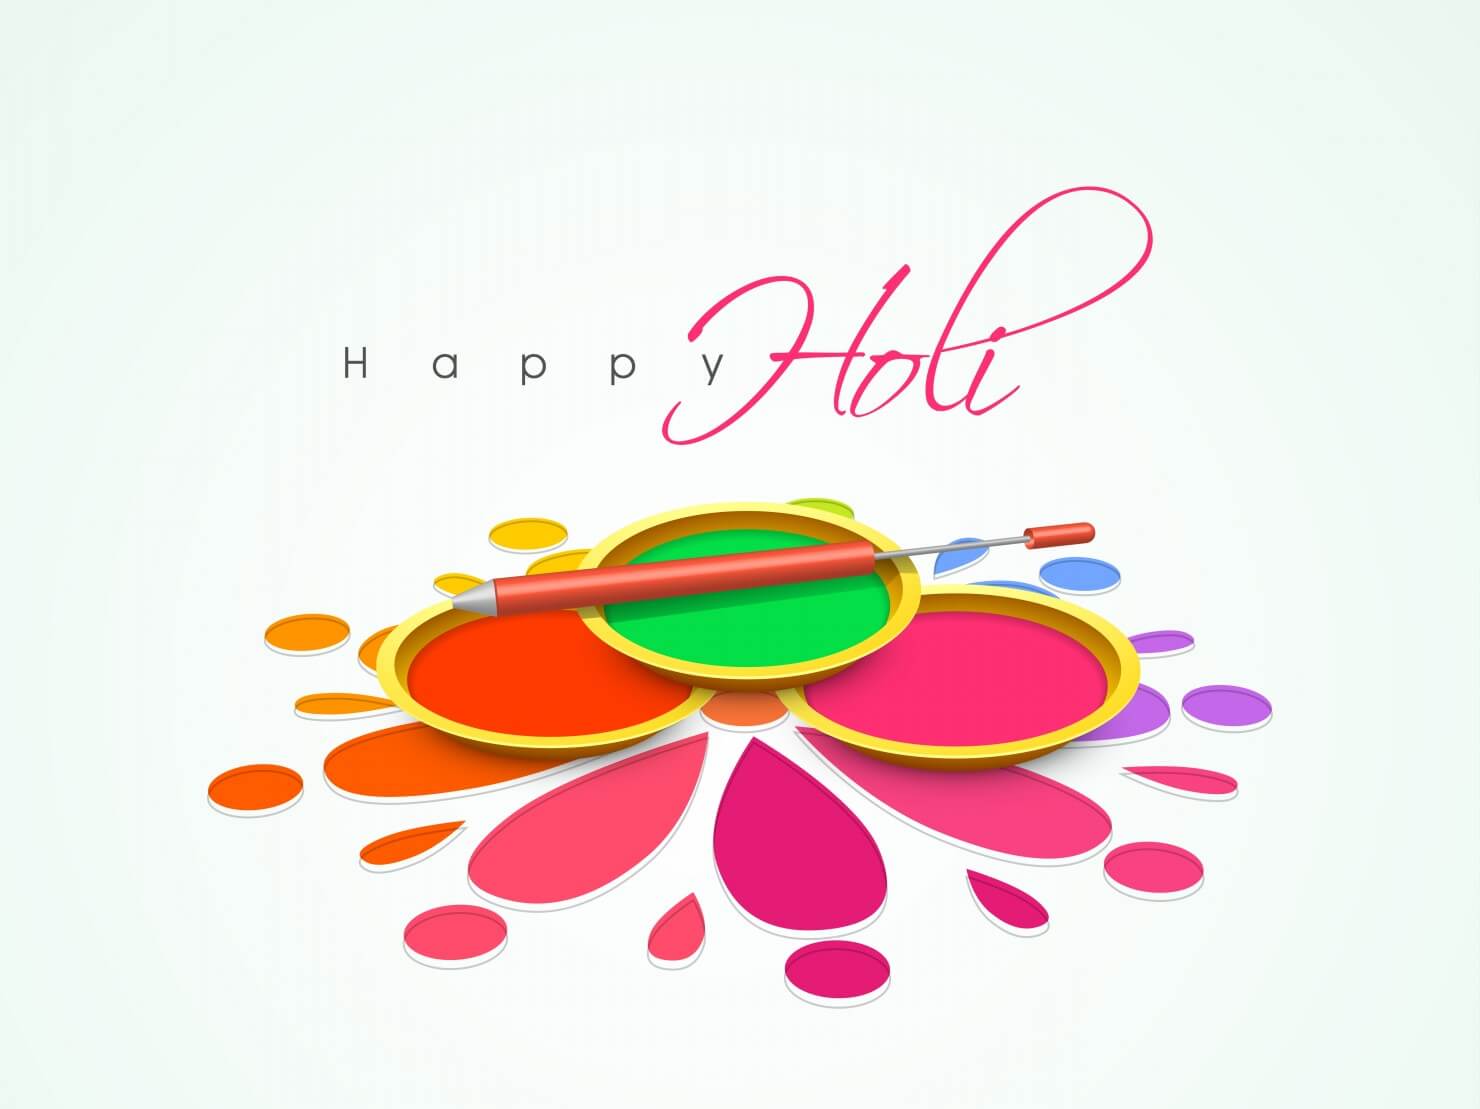 Download Happy Holi Wallpapers And Holi Greetings Cgfrog